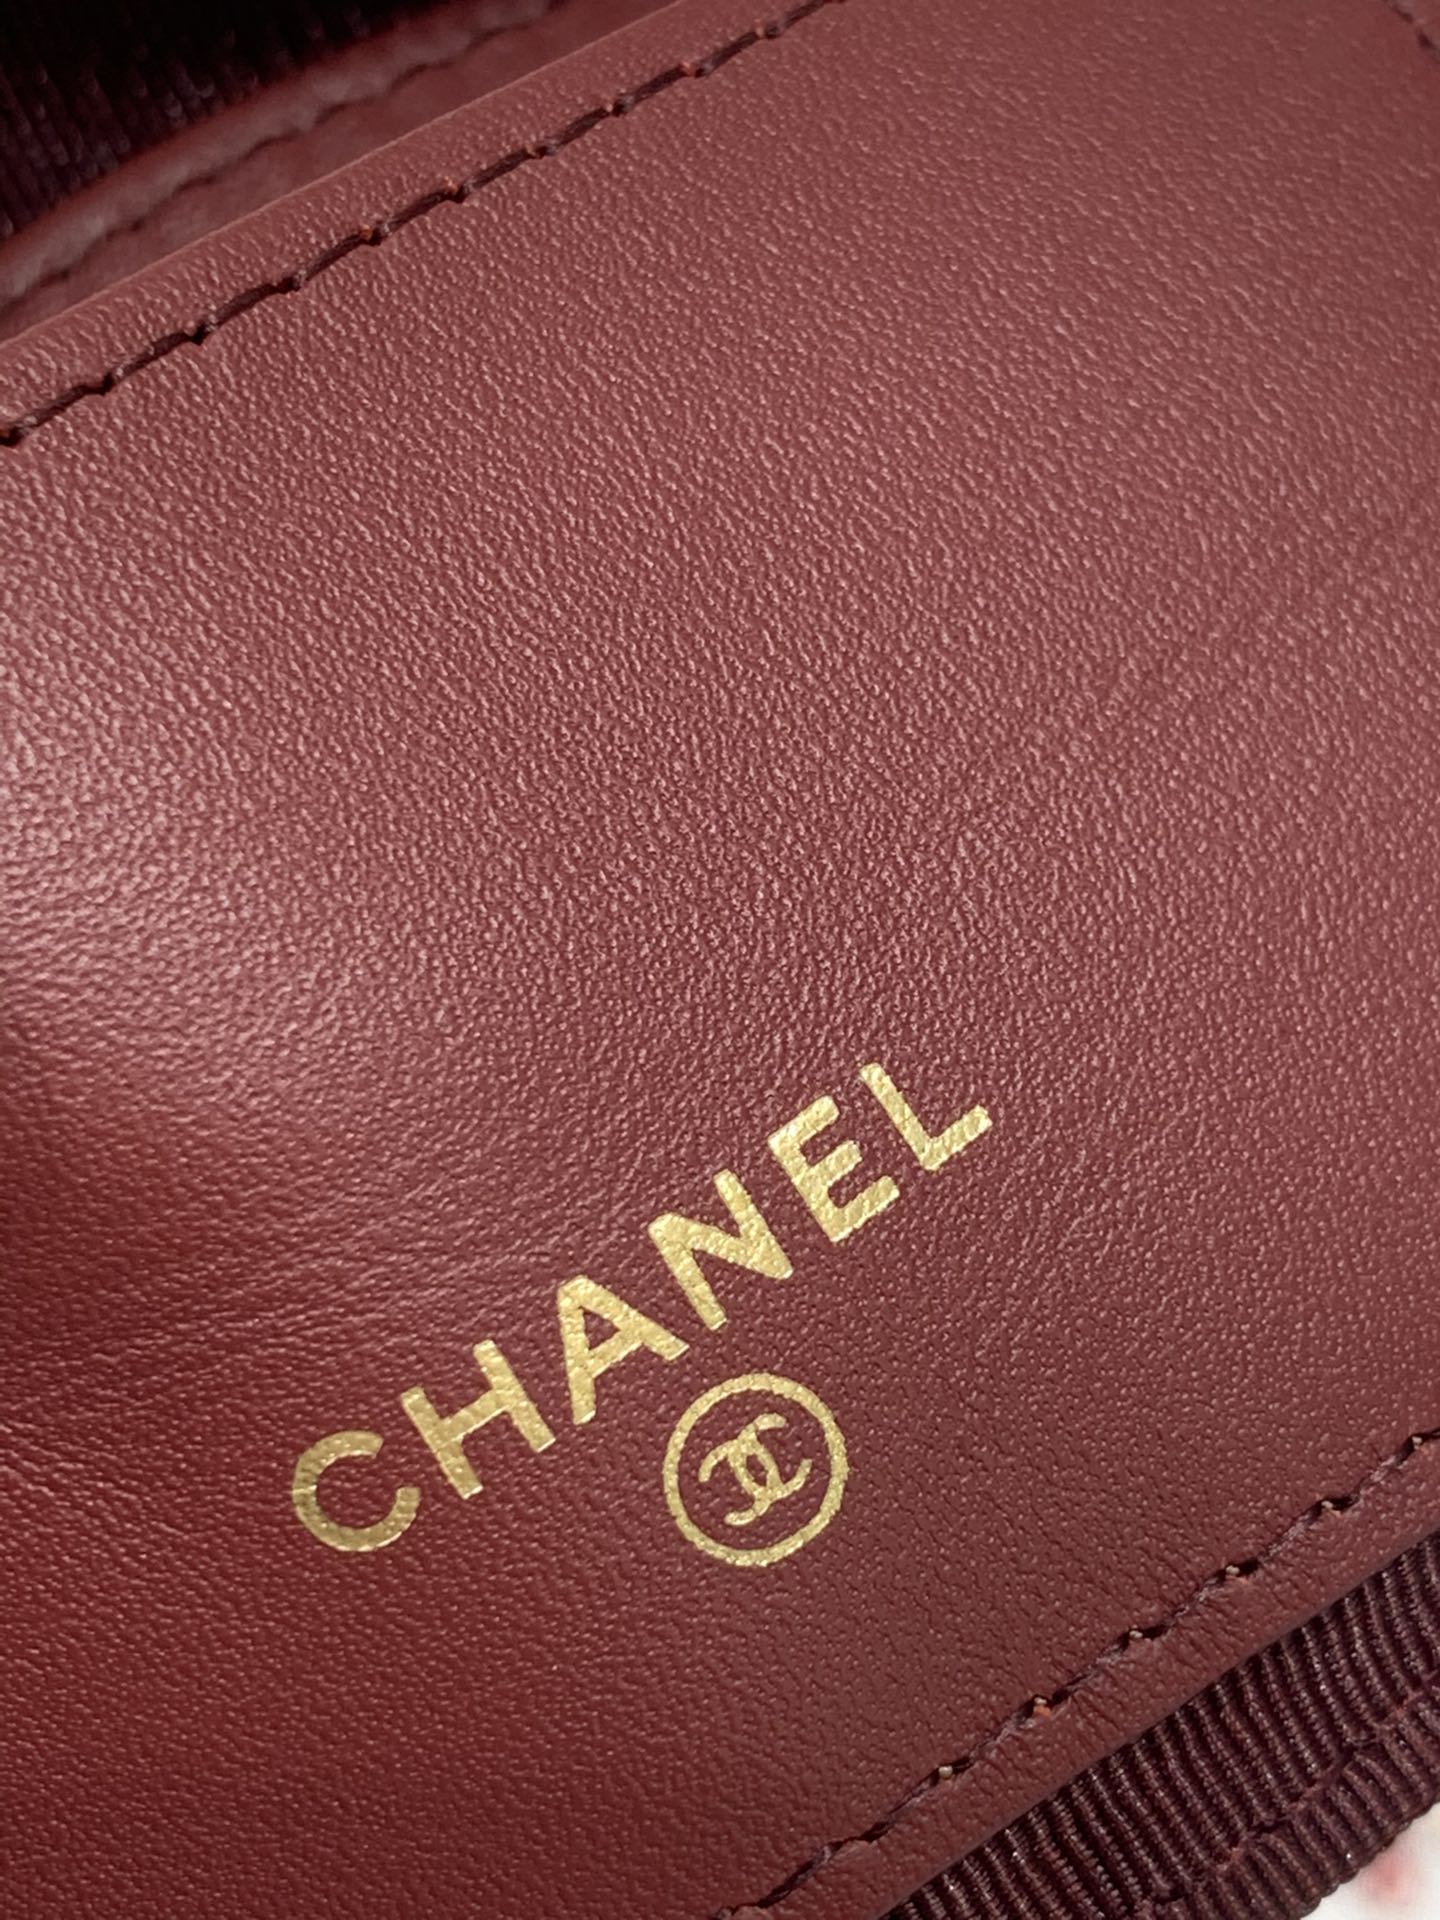 Chanel→零钱包 拉牌是双C标志性logo 全套包装 14-11-1 酒红鱼子酱牛皮 金扣